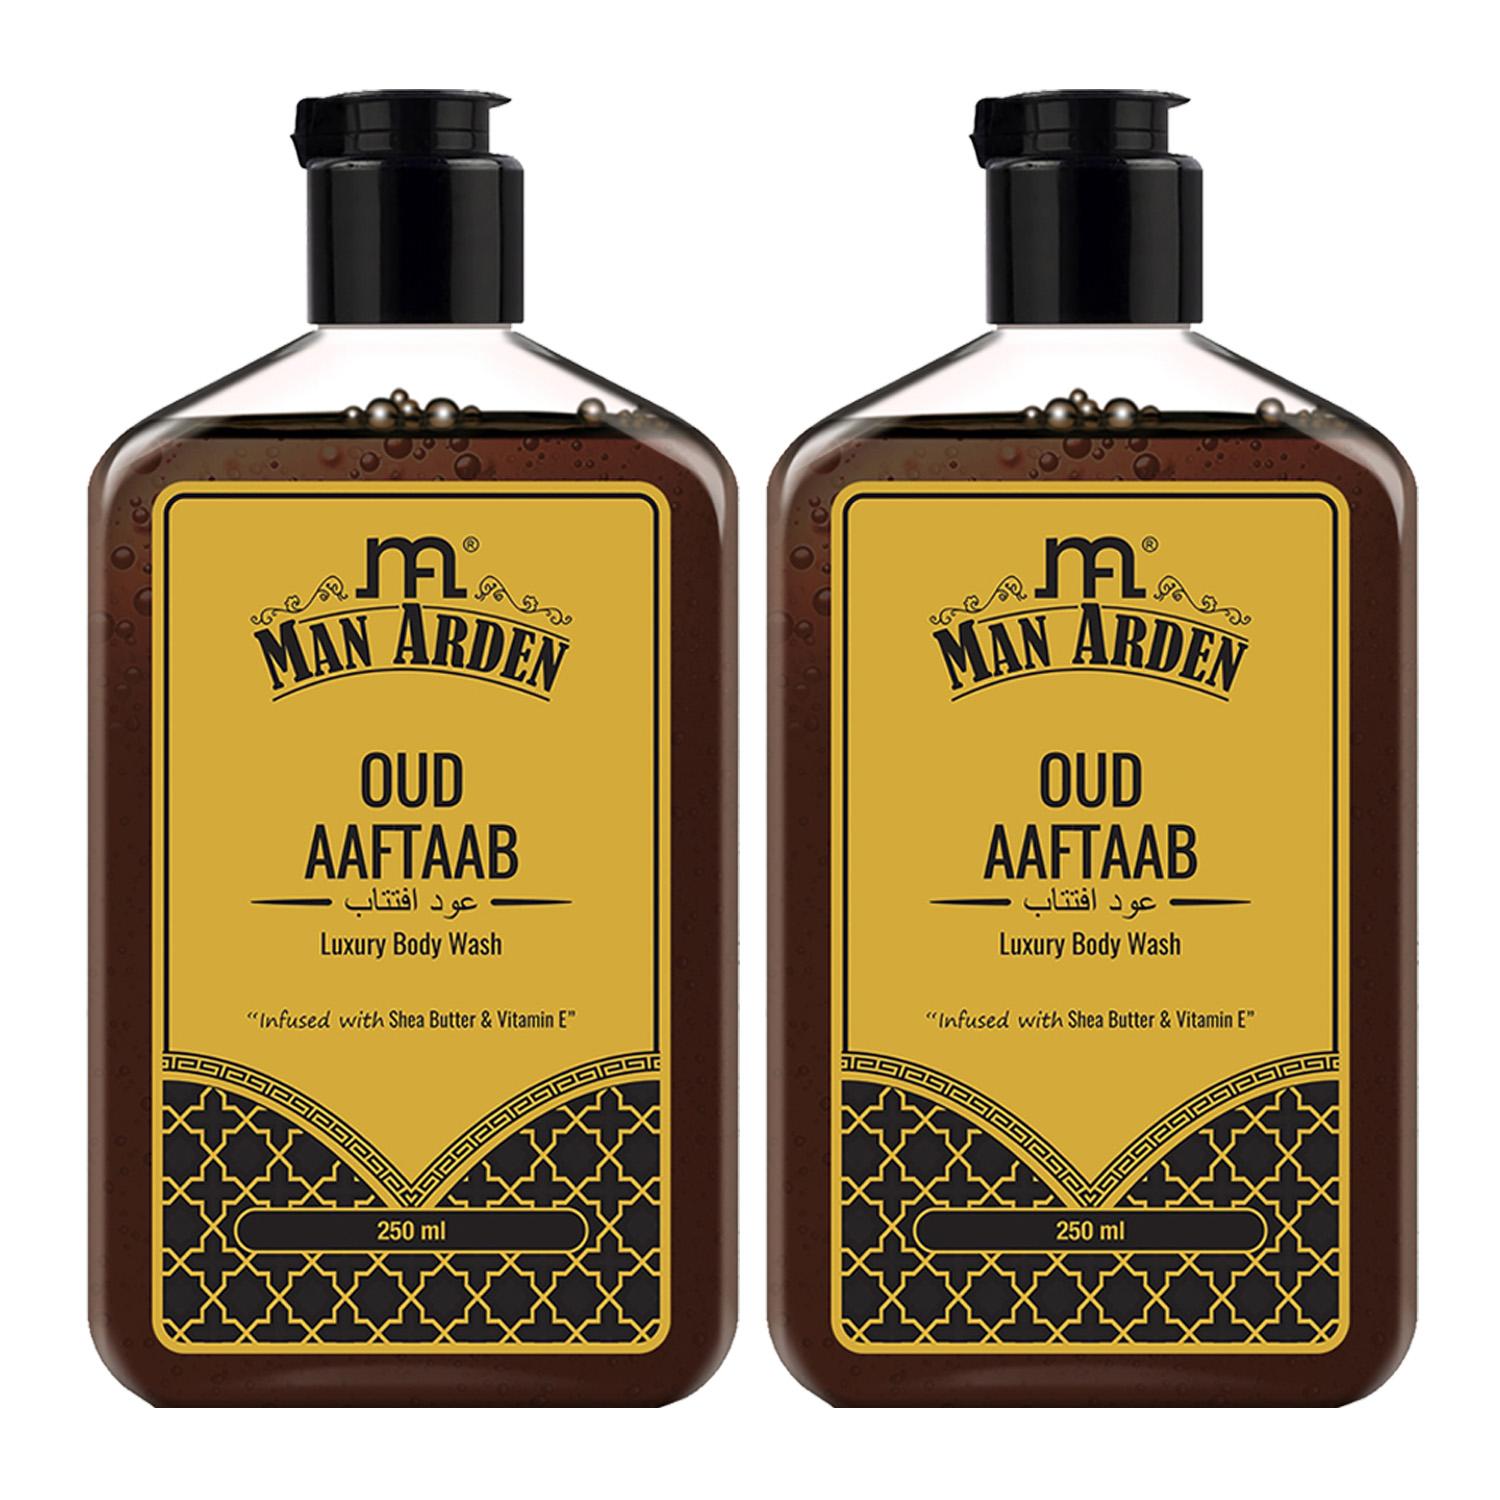 Man Arden | Man Arden Luxury Body Wash Oud Aaftaab (250 ml) (Pack of 2)